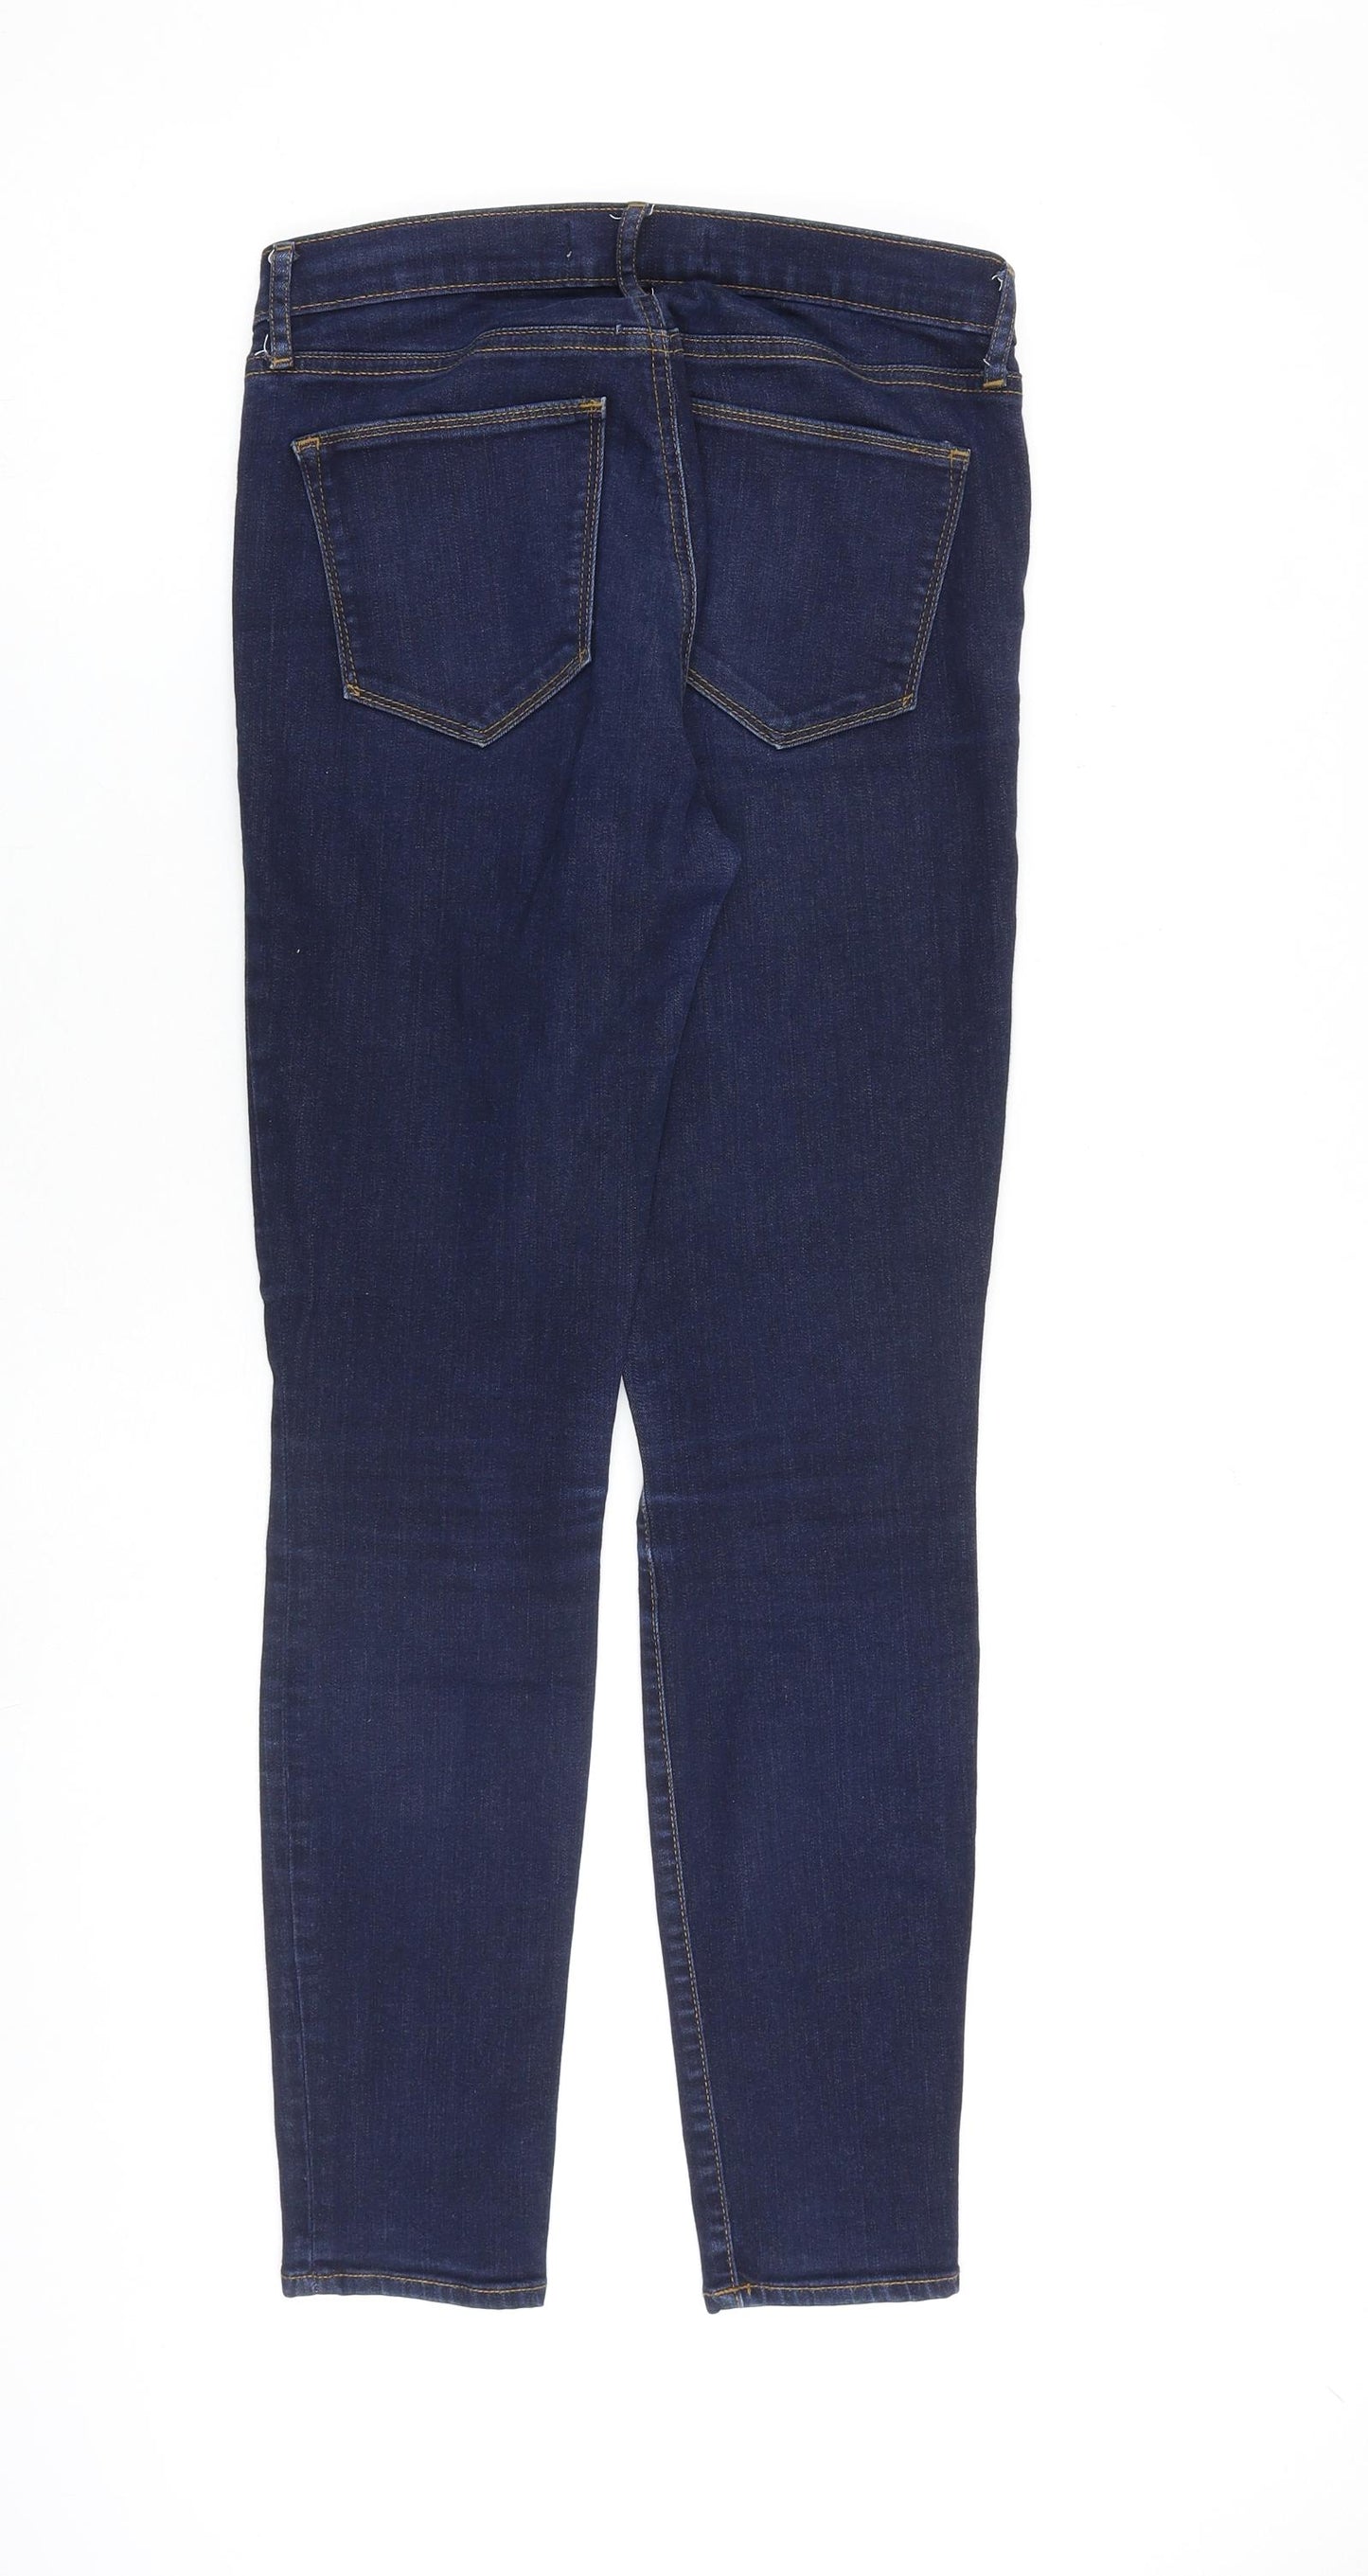 Gap Womens Blue Cotton Skinny Jeans Size 27 in L30 in Slim Zip